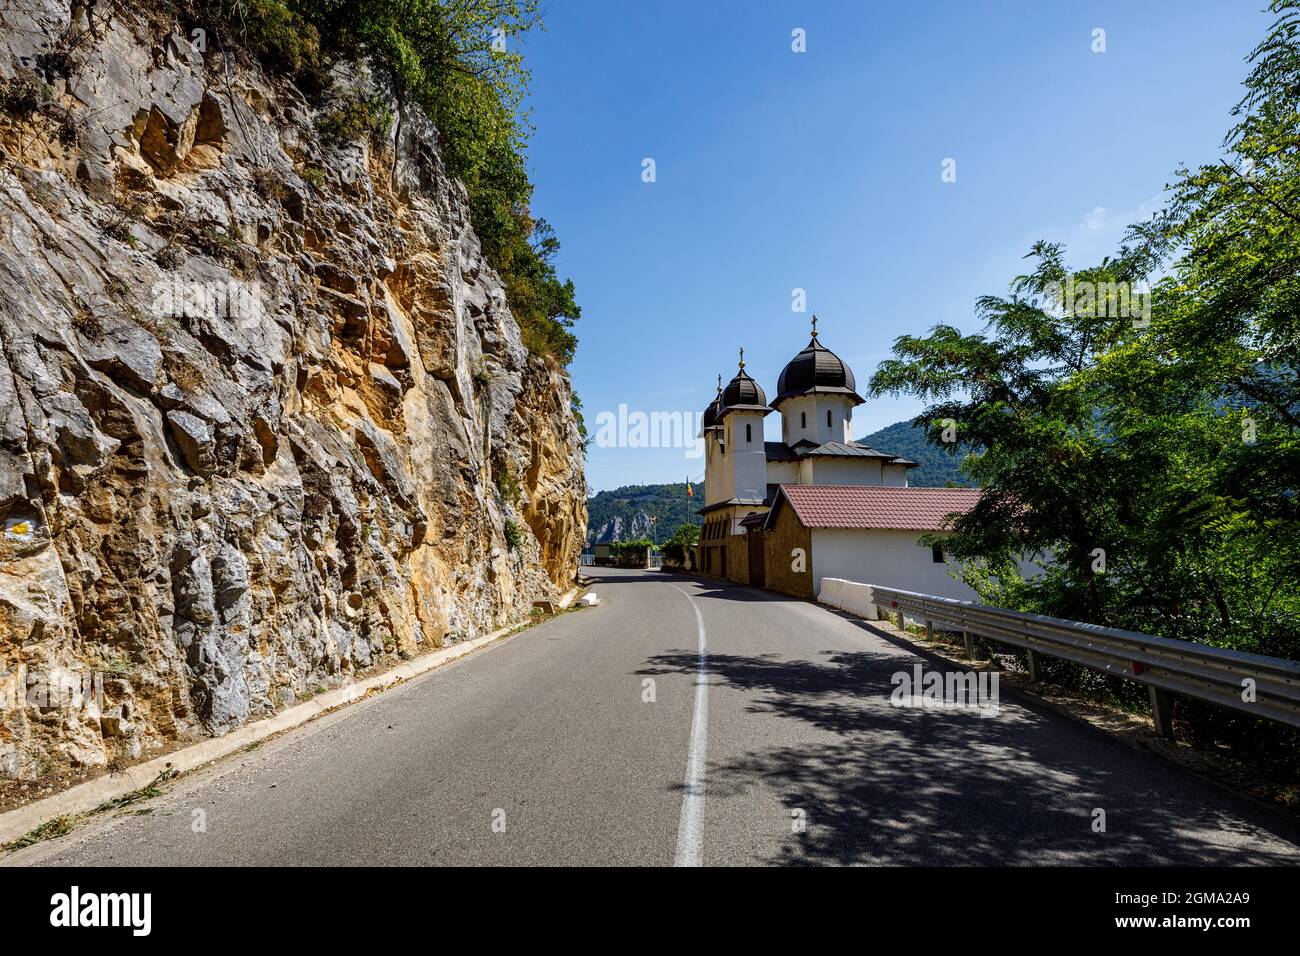 The Mraconia Monastery at the Danube River in Romania Stock Photo